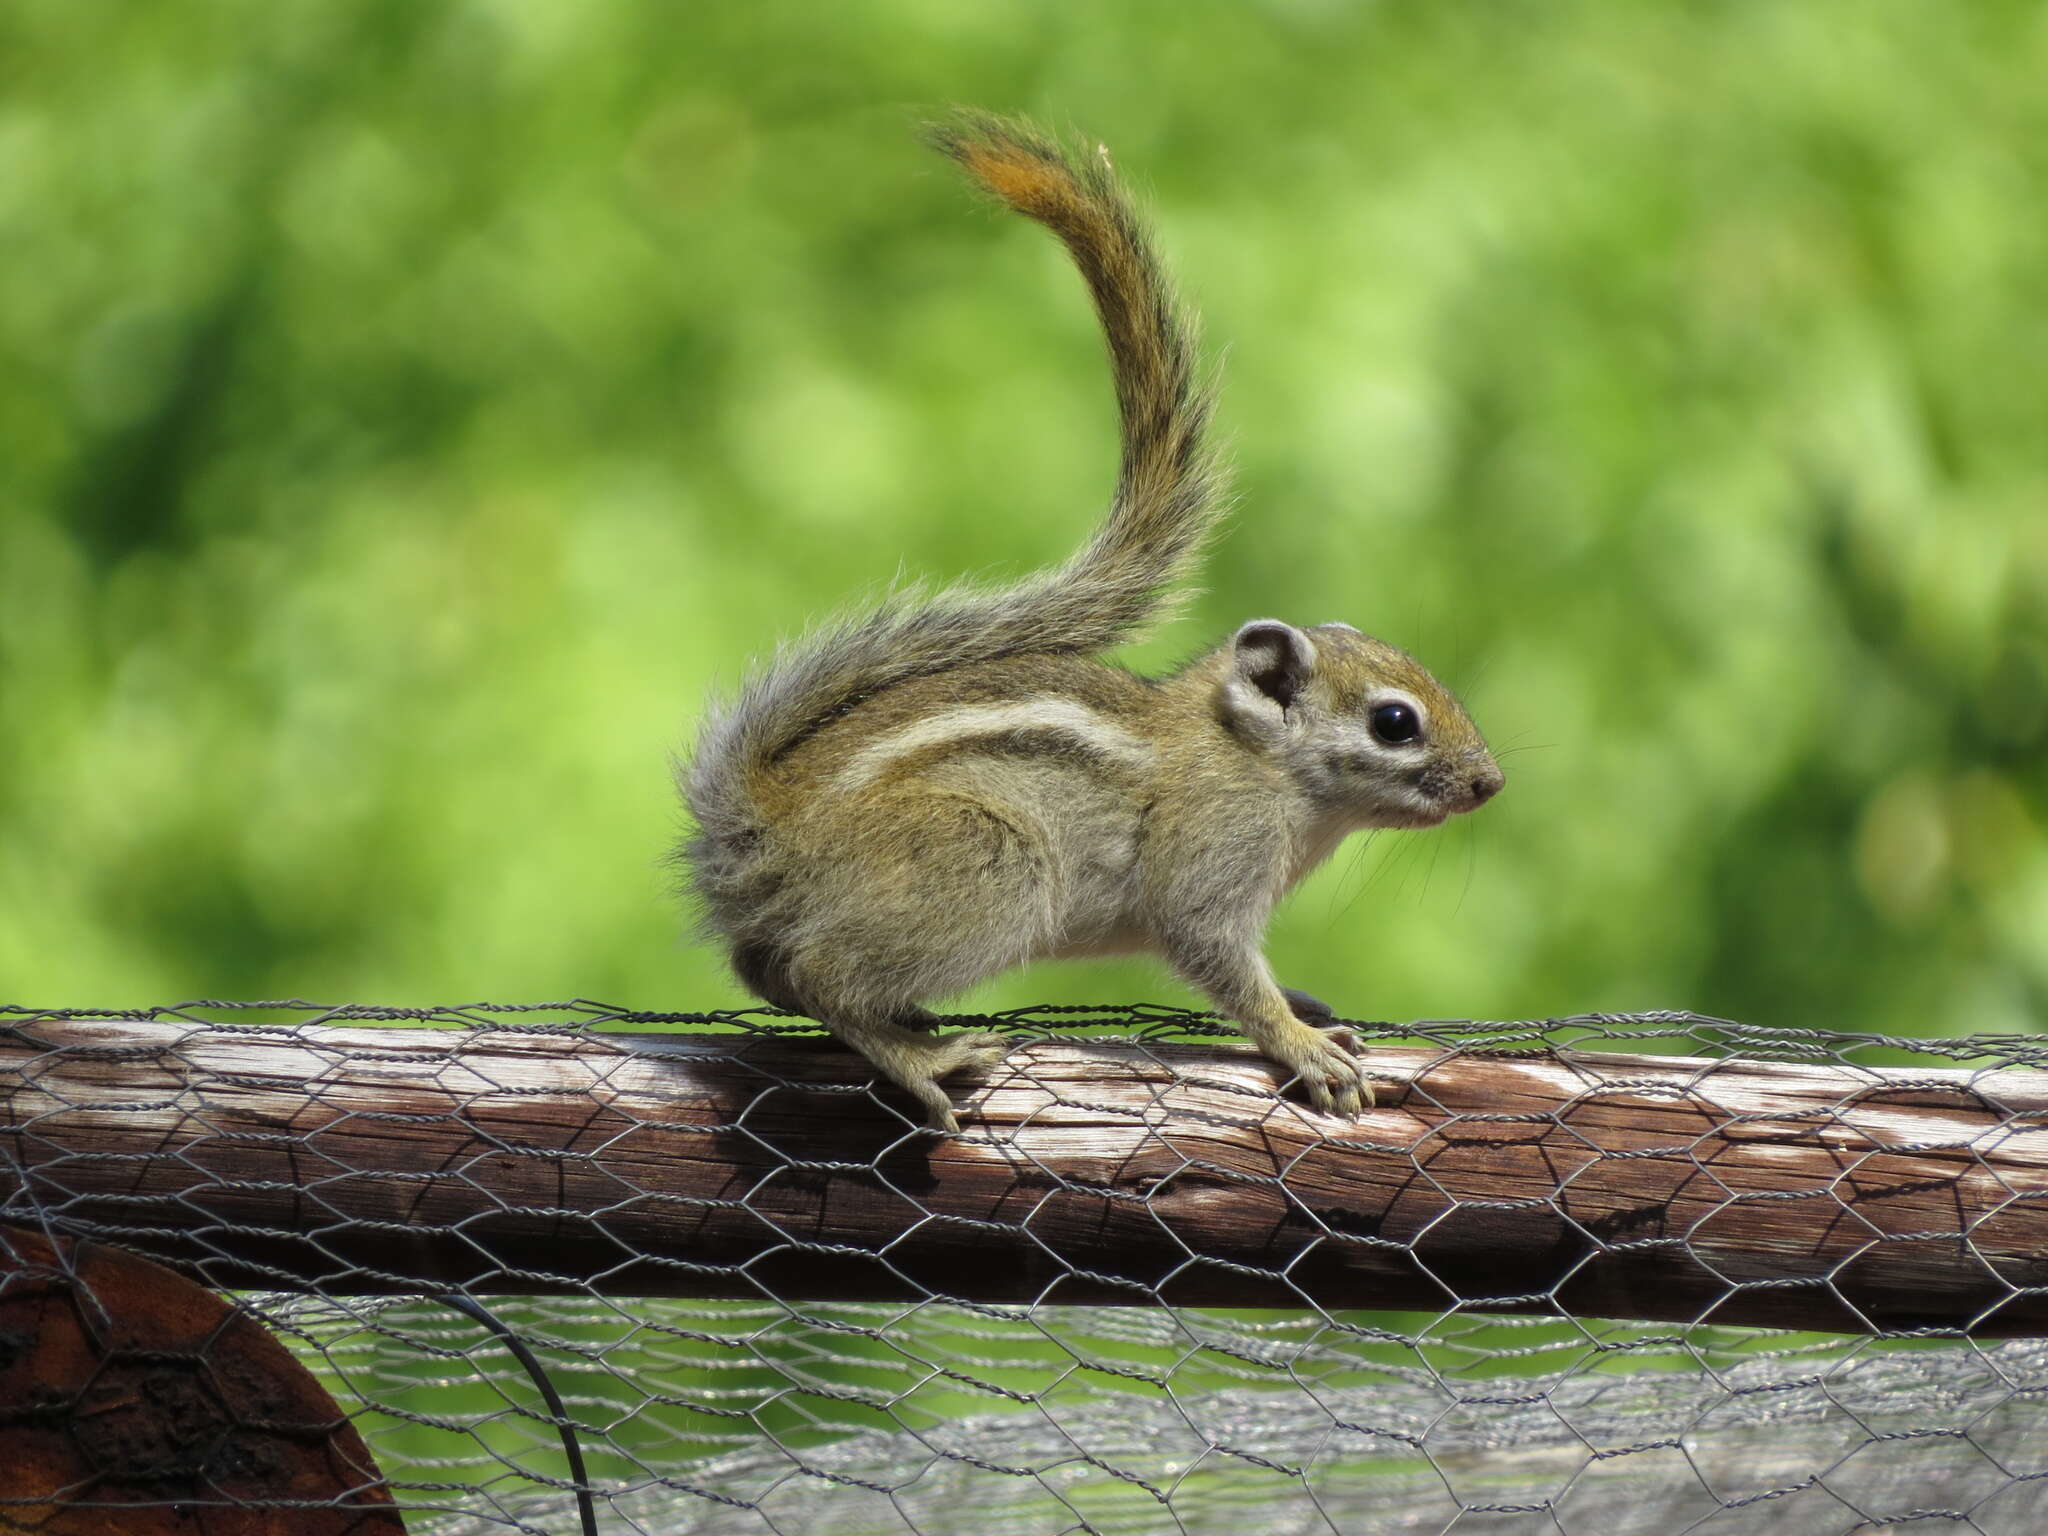 Image of Congo Rope Squirrel